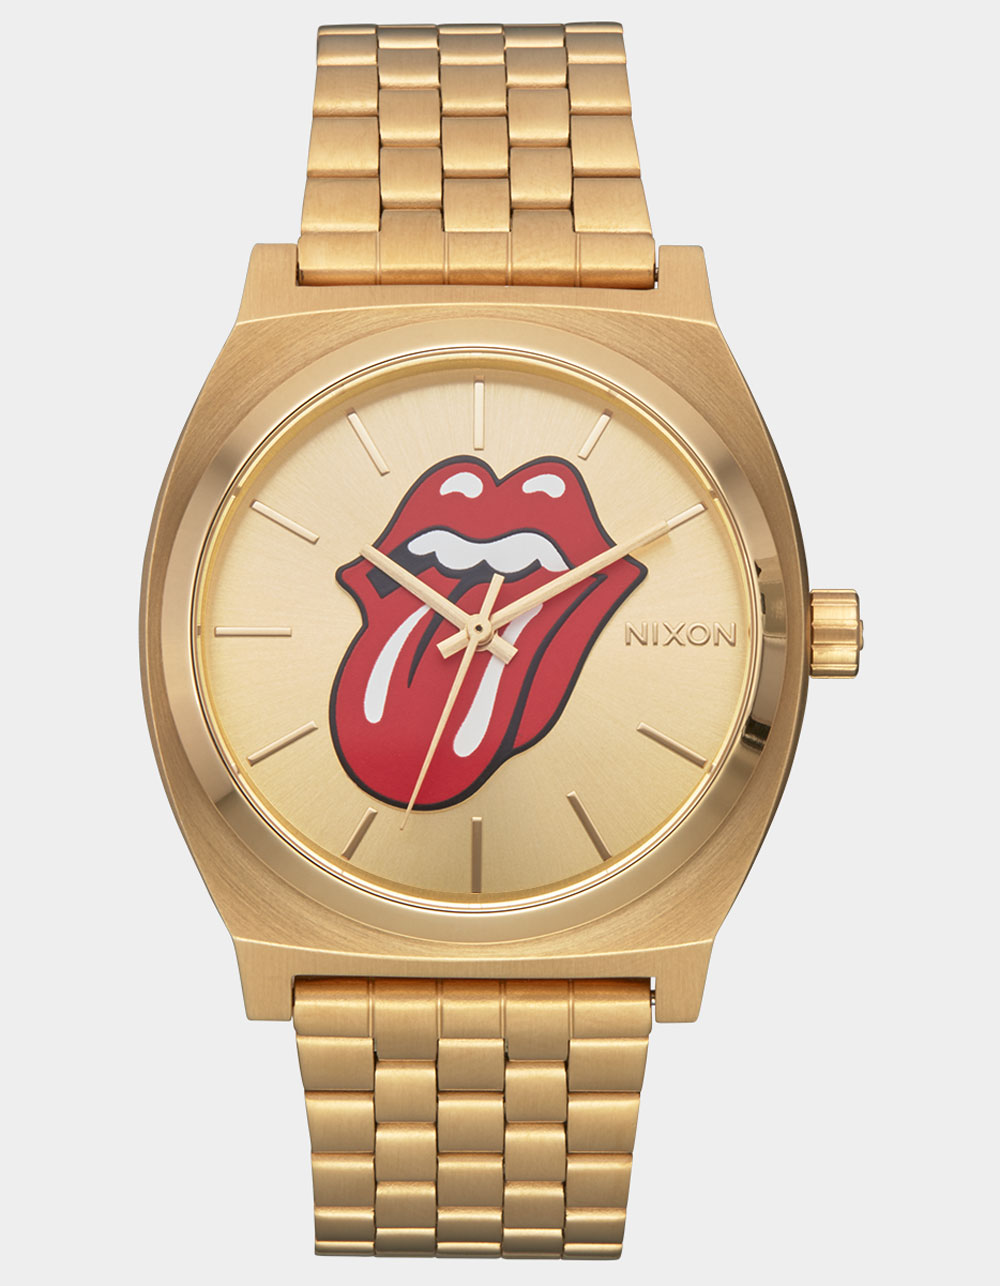 NIXON x Rolling Stones Time Teller Watch